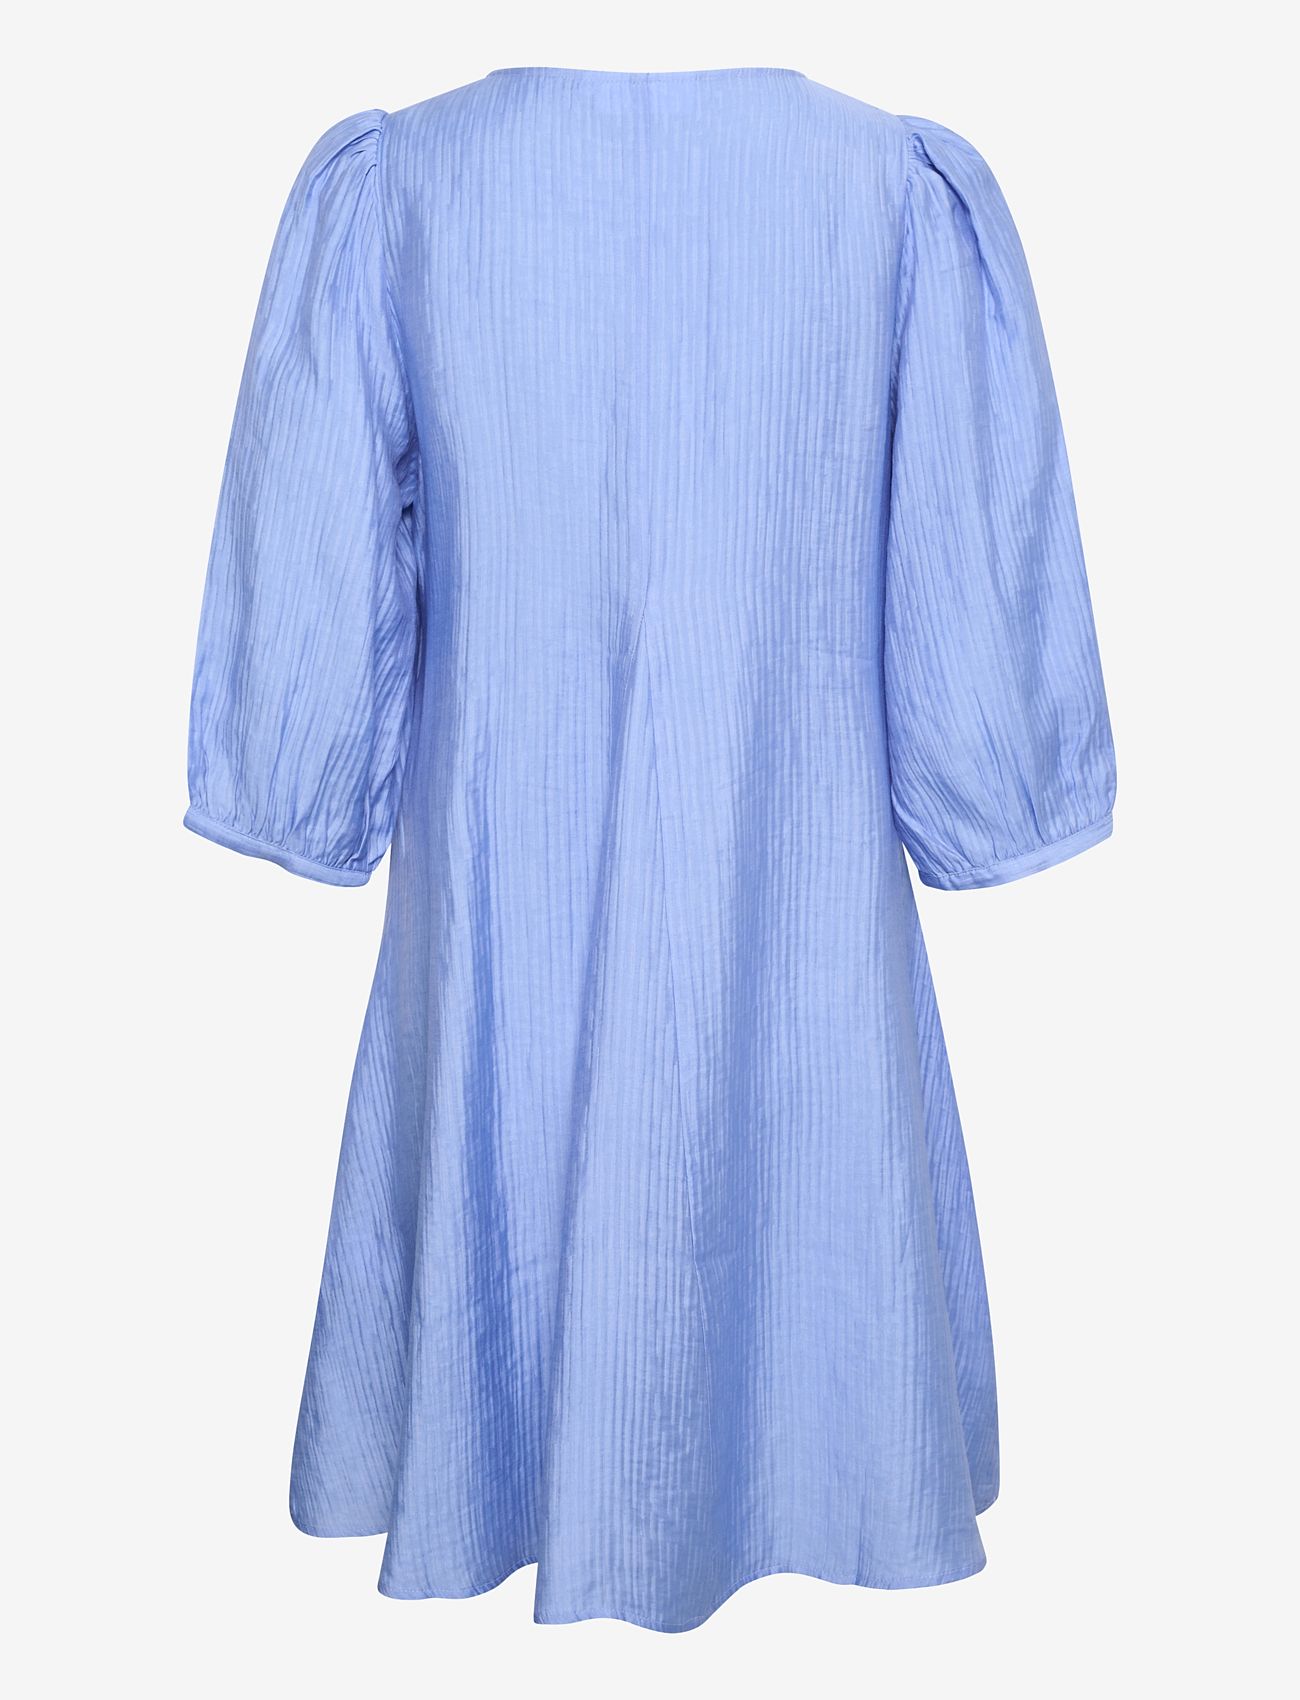 Karen By Simonsen - NomaKB Indie Dress - short dresses - della robbia blue - 1